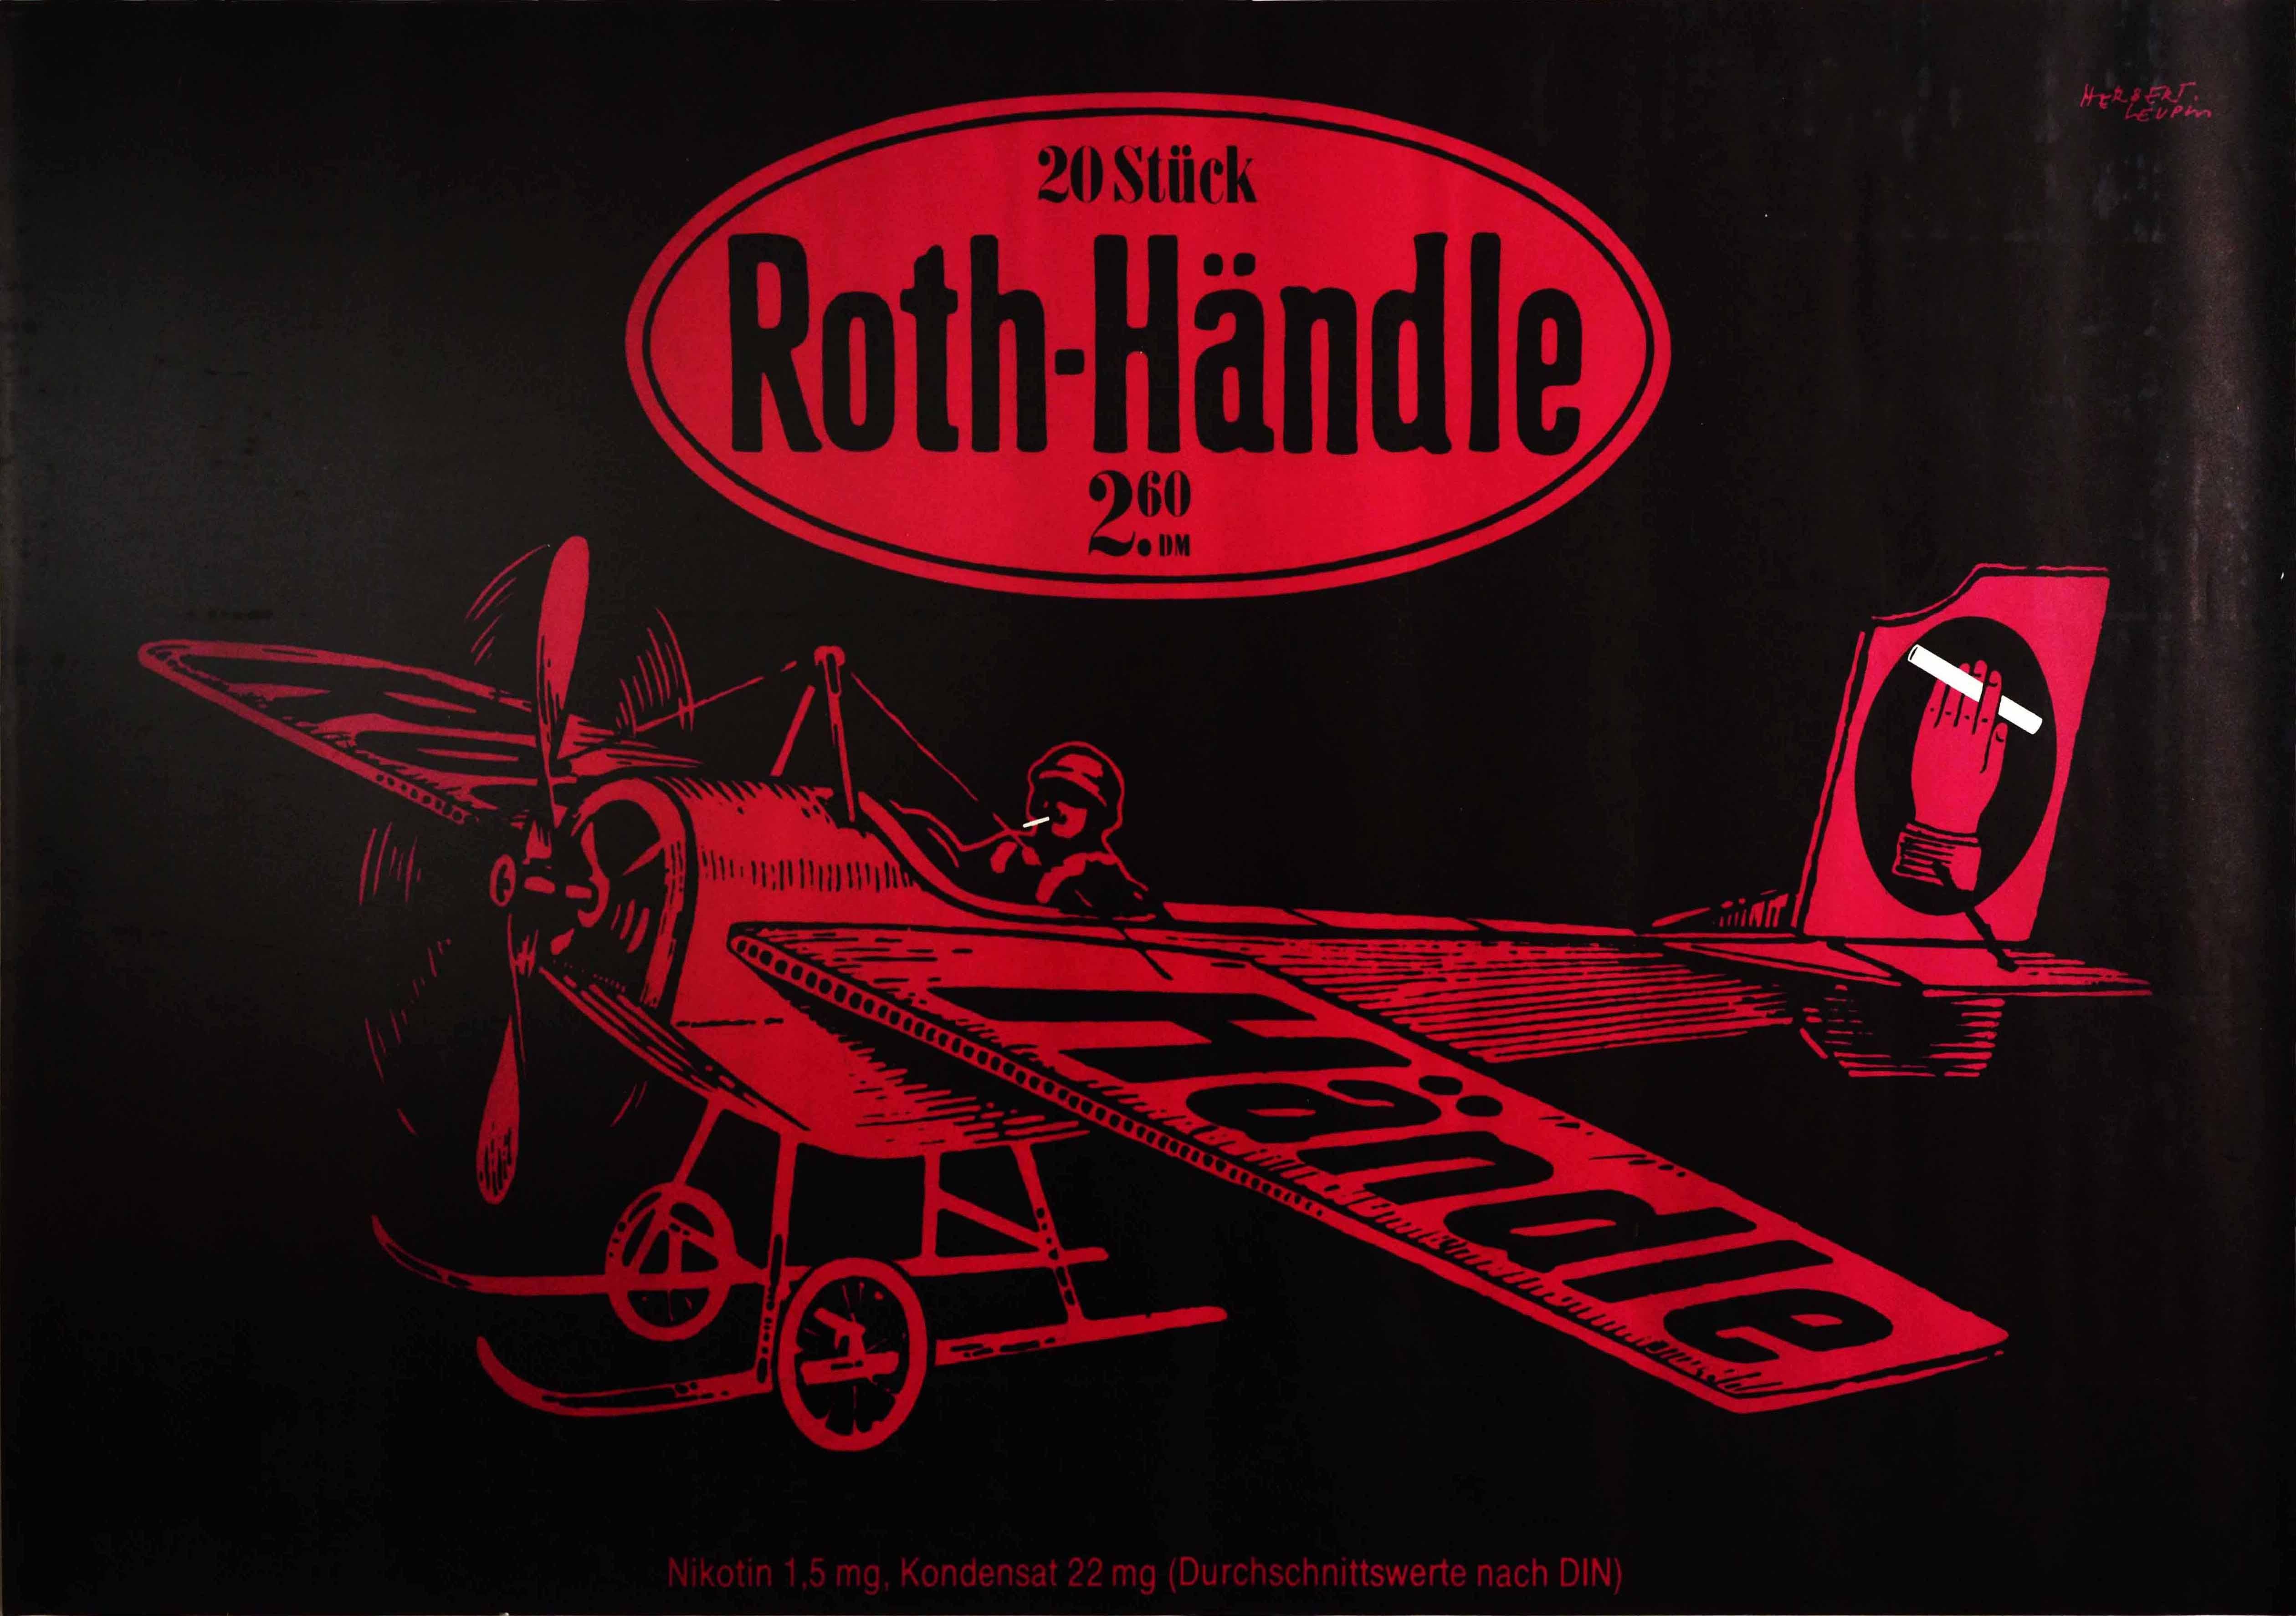 Herbert Leupin Print - Original Vintage Poster Roth Handle Tobacco Cigarettes Smoking Ad Plane Design